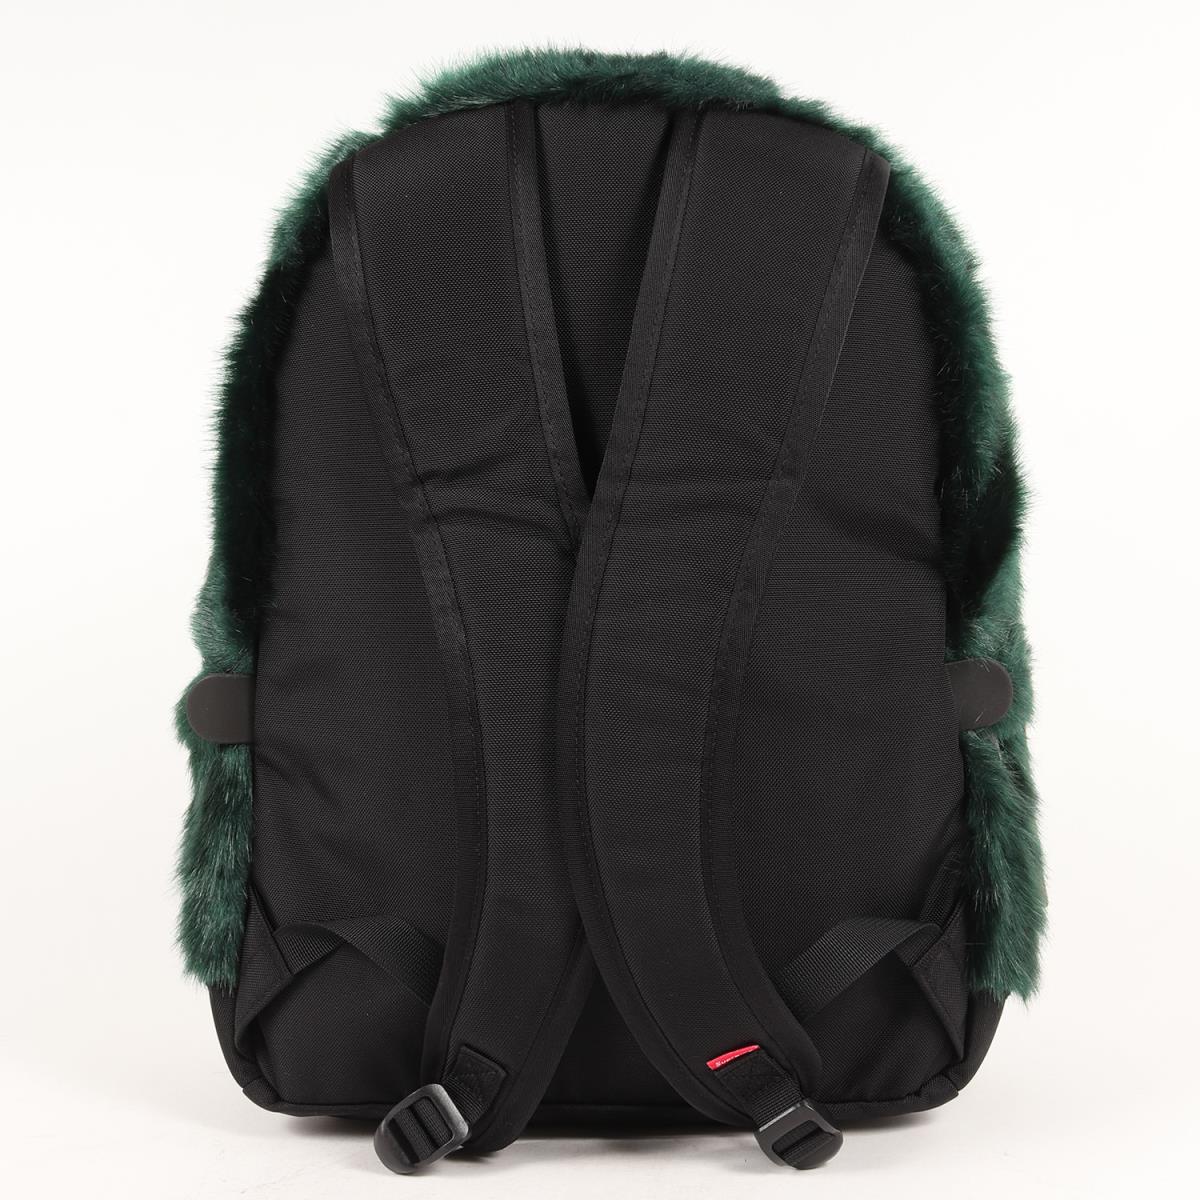 Supreme シュプリーム THE NORTH FACE ノースフェイス フェイクファー バックパック Fur Backpack 20AW グリーン 緑 カバン コラボ 【メンズ】【K3467】